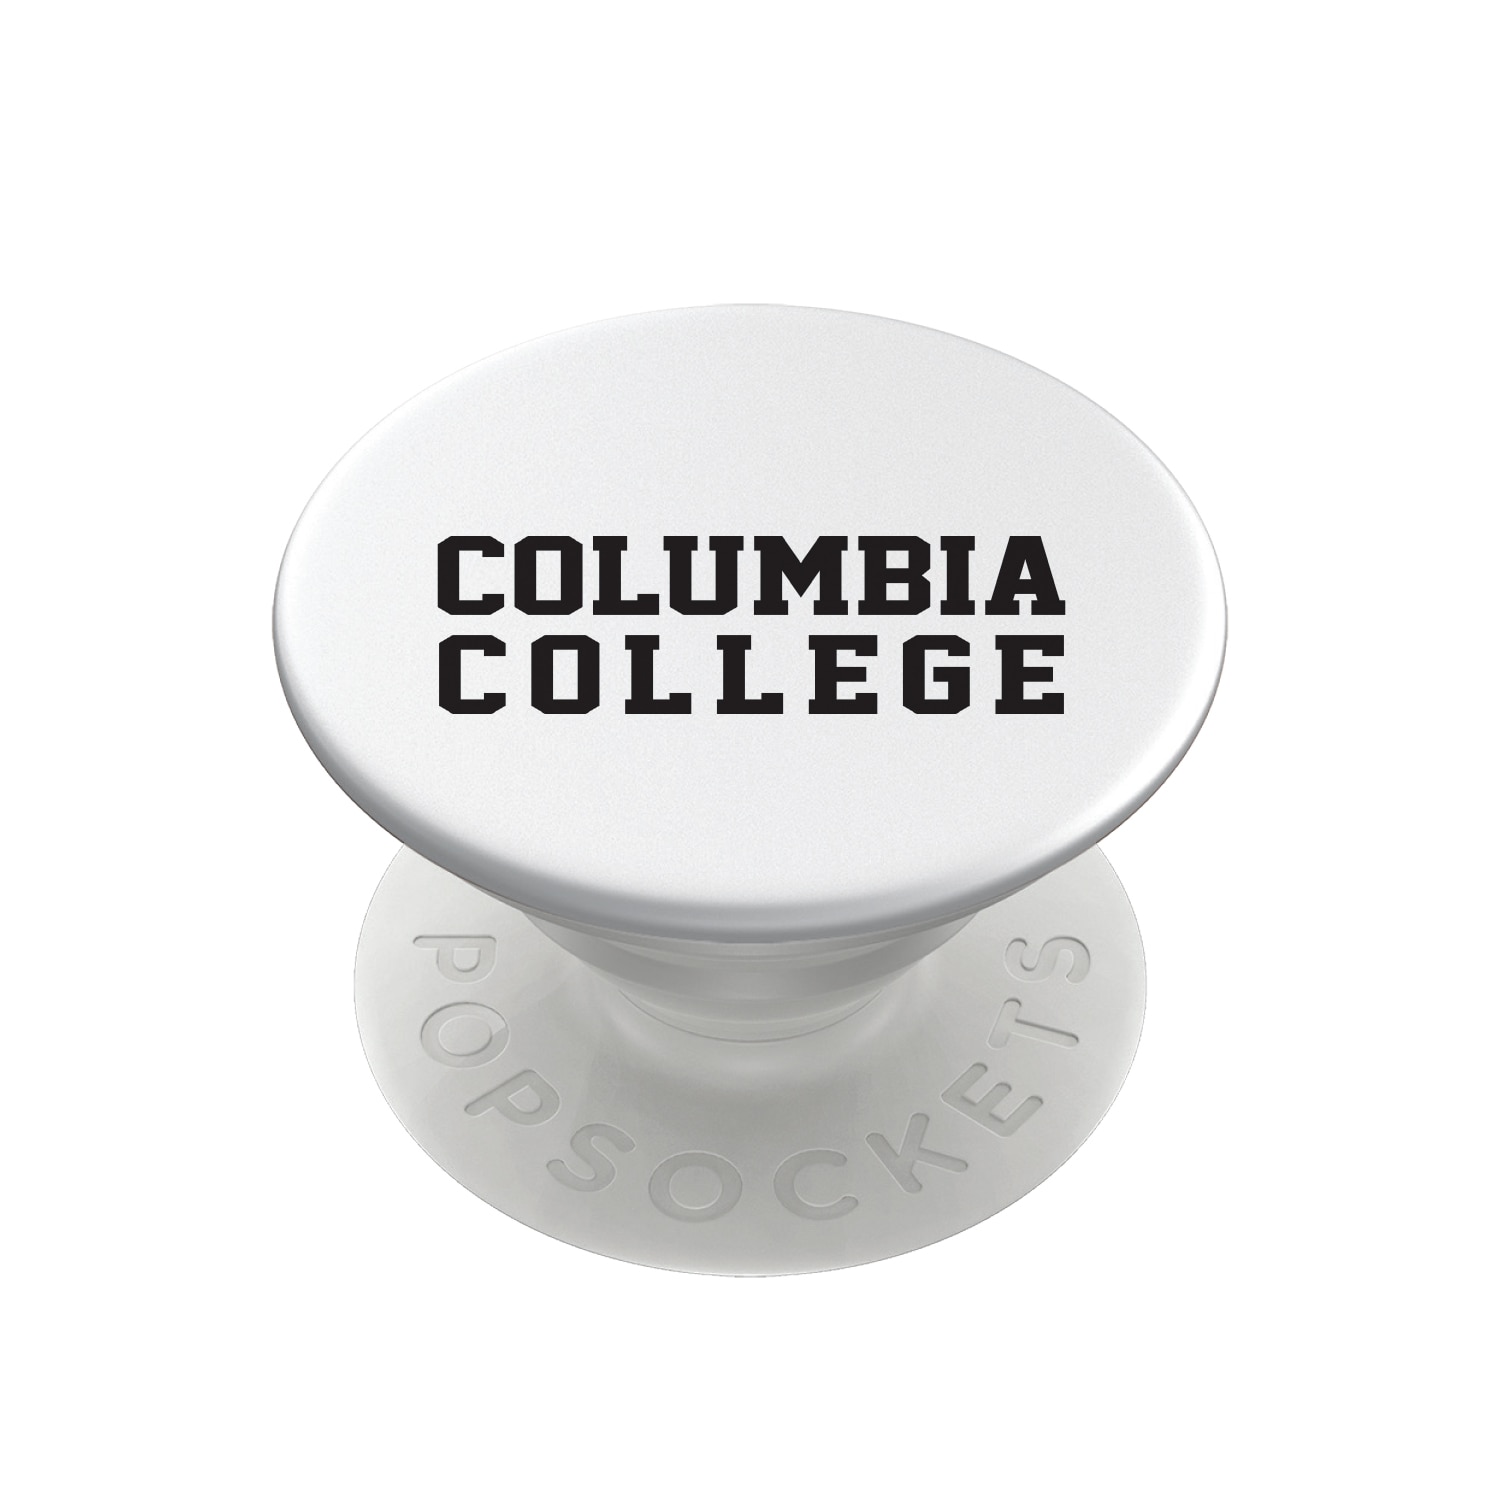 Columbia College Popsocket